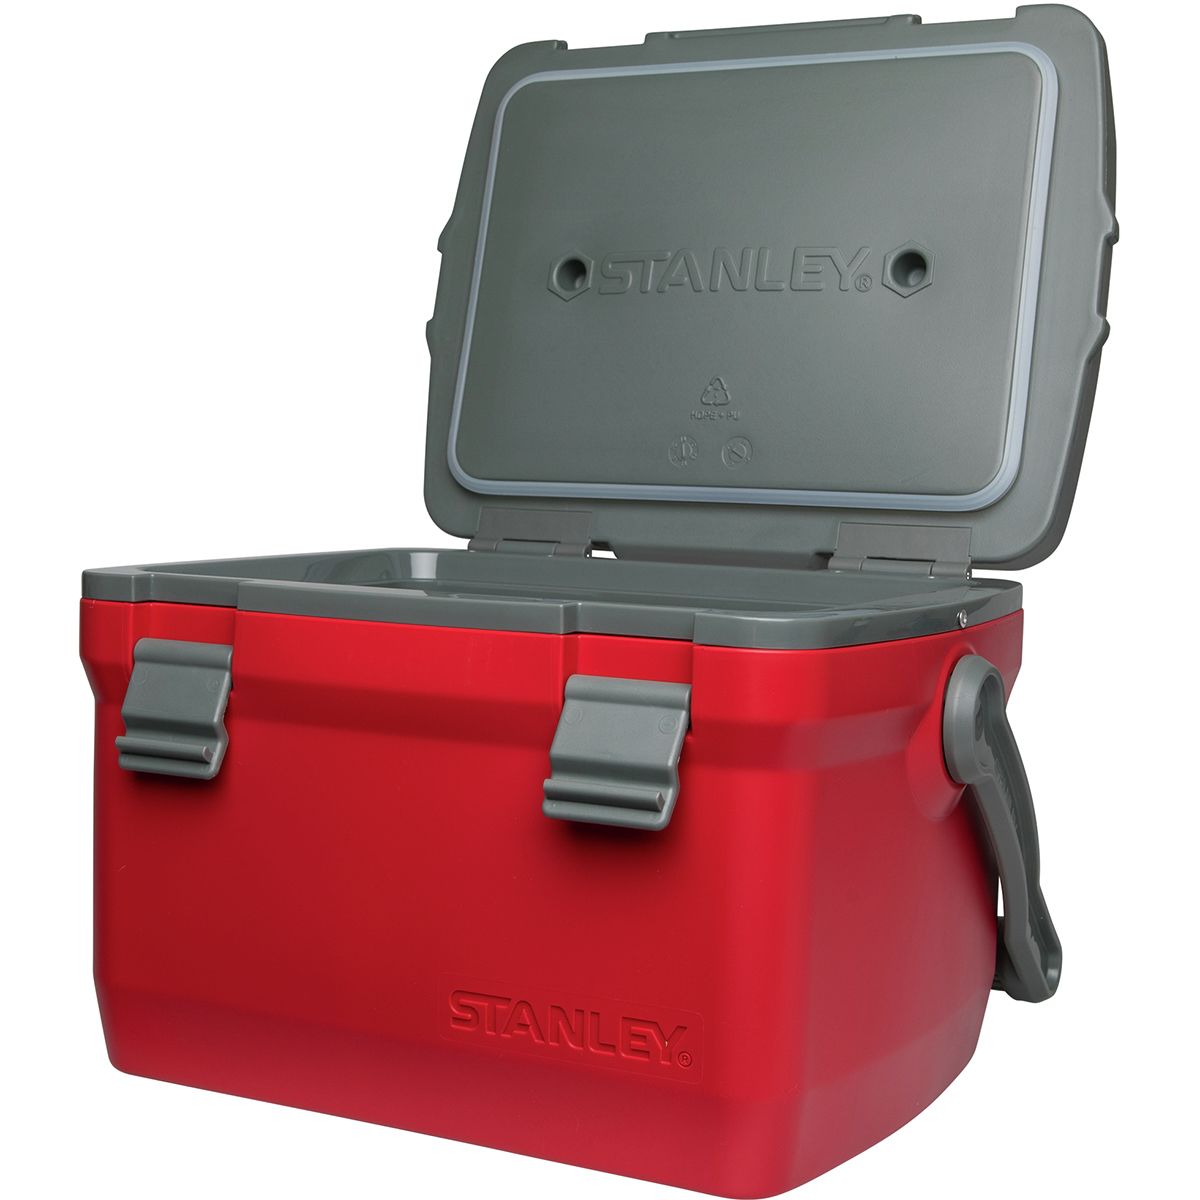 Stanley Adventure Series Easy Carry Outdoor Cooler 7QT - 01622